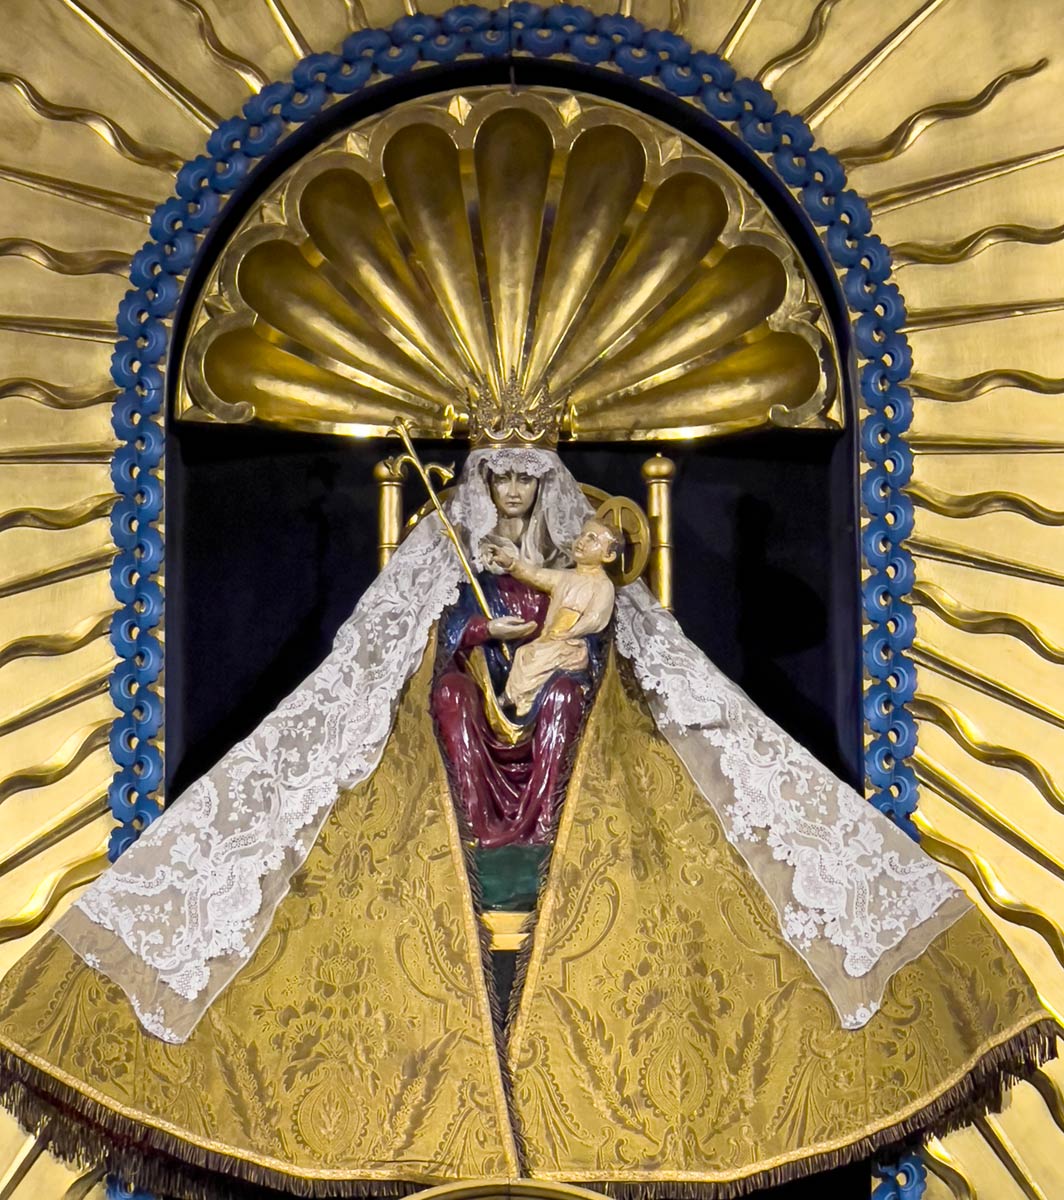 मैरी का चमत्कारी चिह्न, हमारी लेडी ऑफ वालसिंघम का तीर्थ